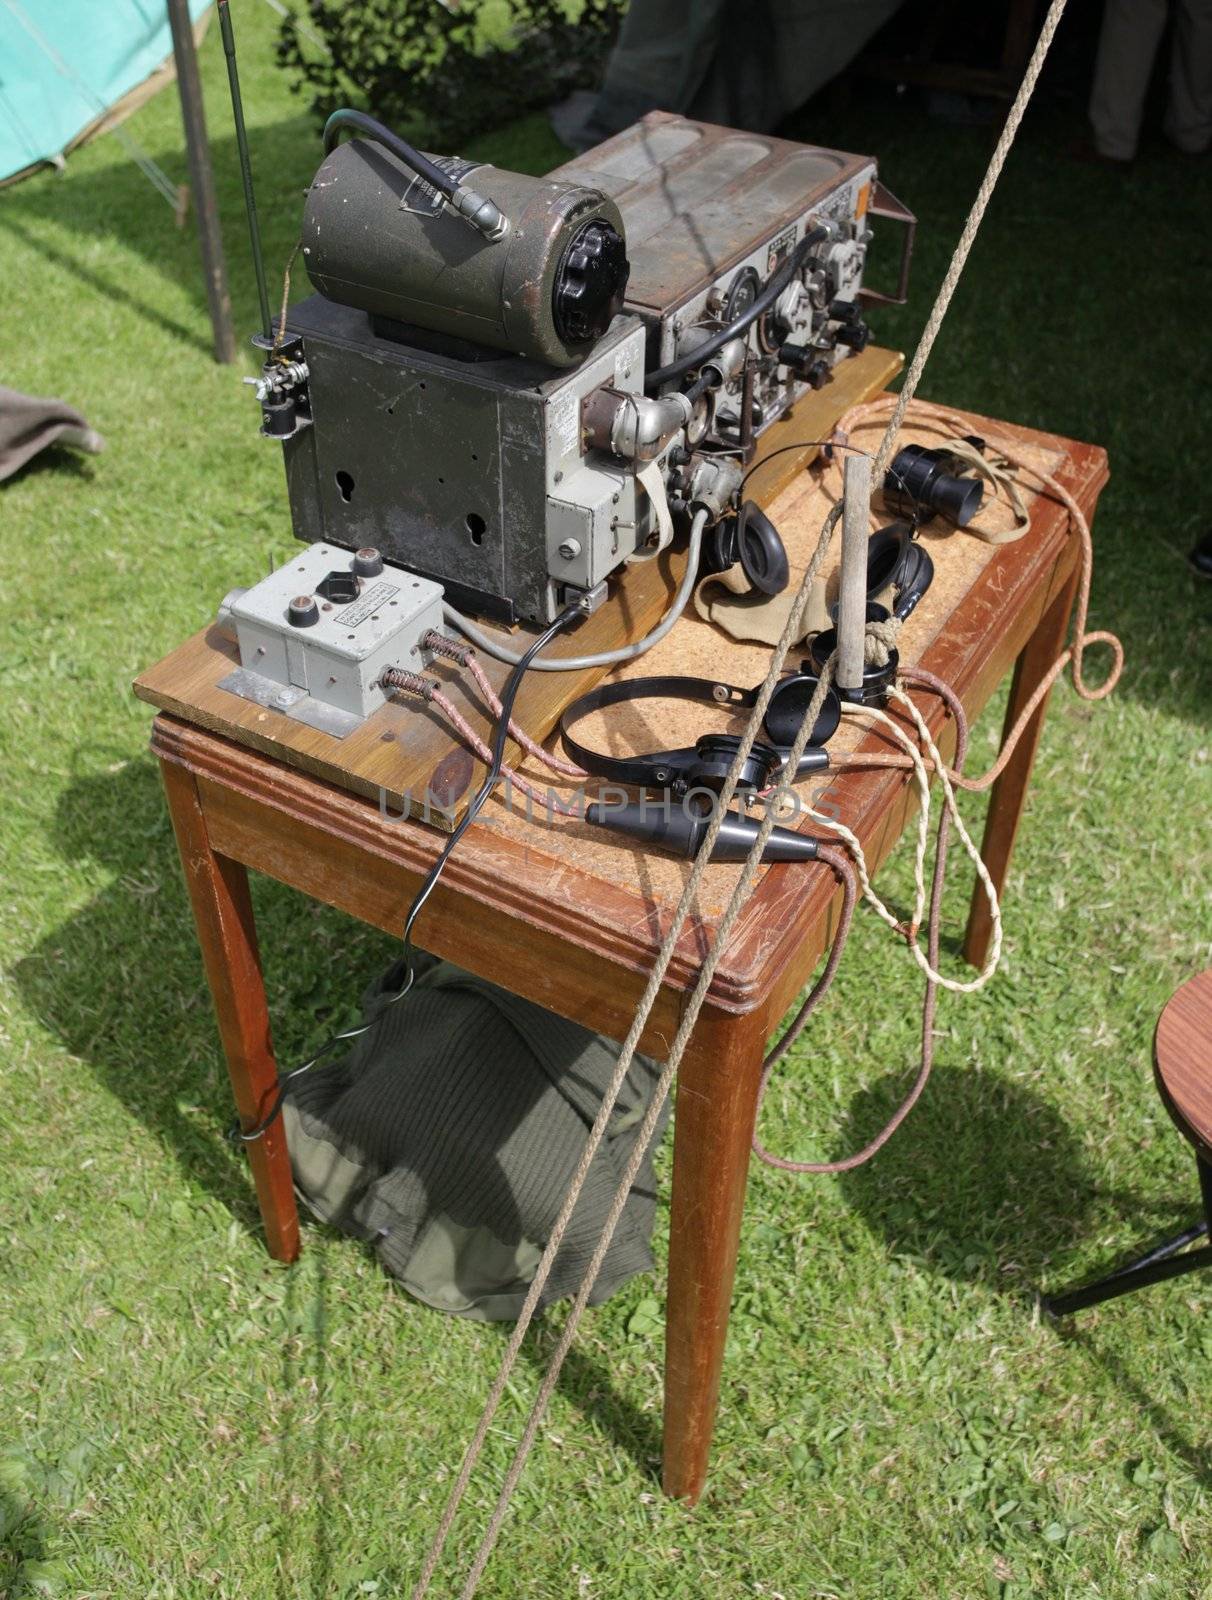 Old world war 2 radio equiptment